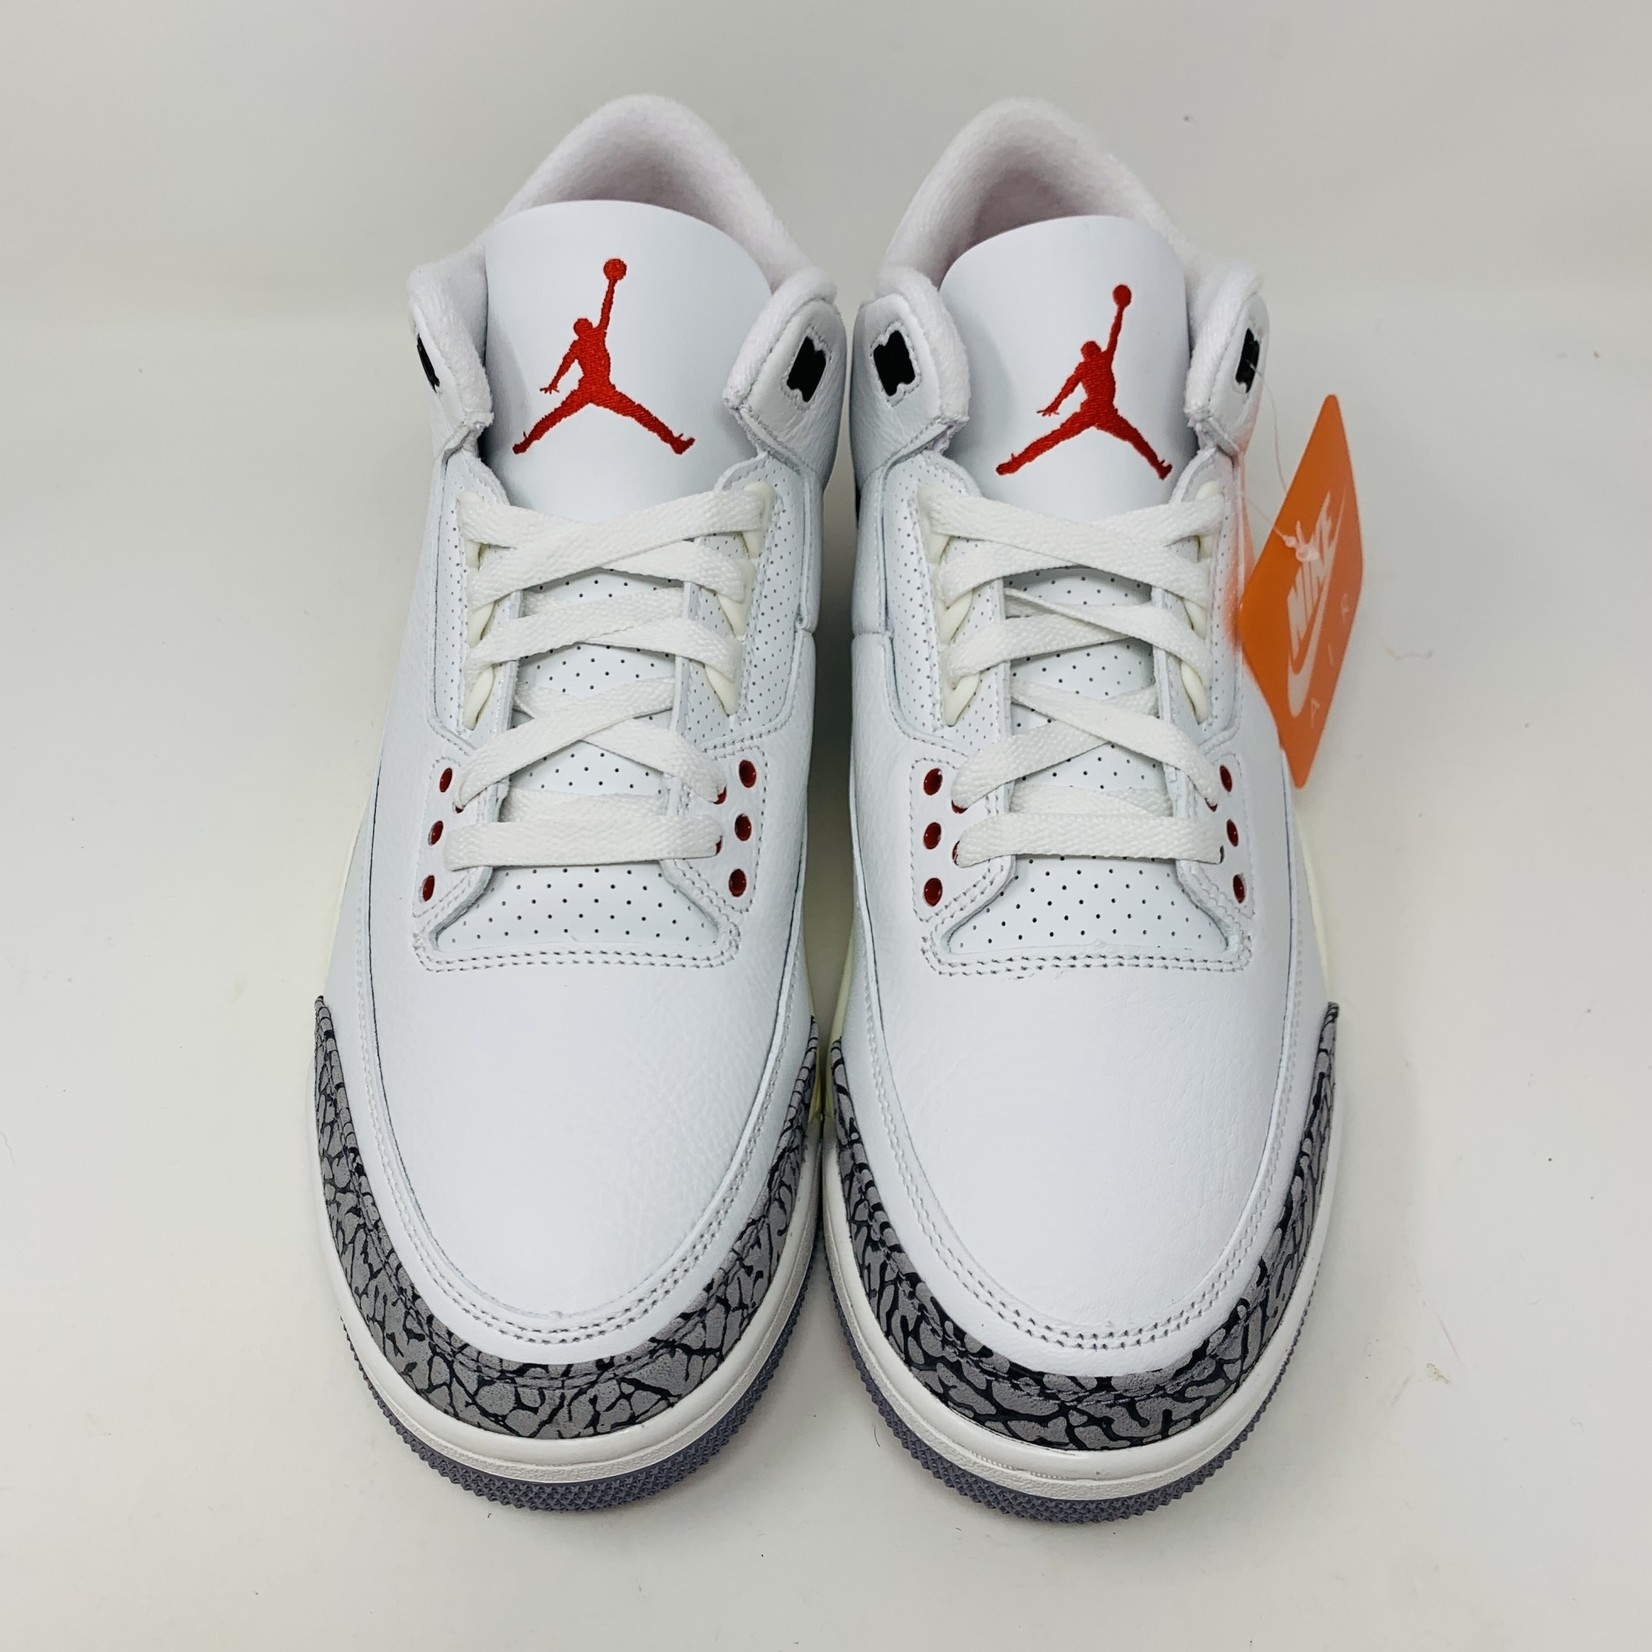 Jordan Jordan 3 Retro White Cement Reimagined